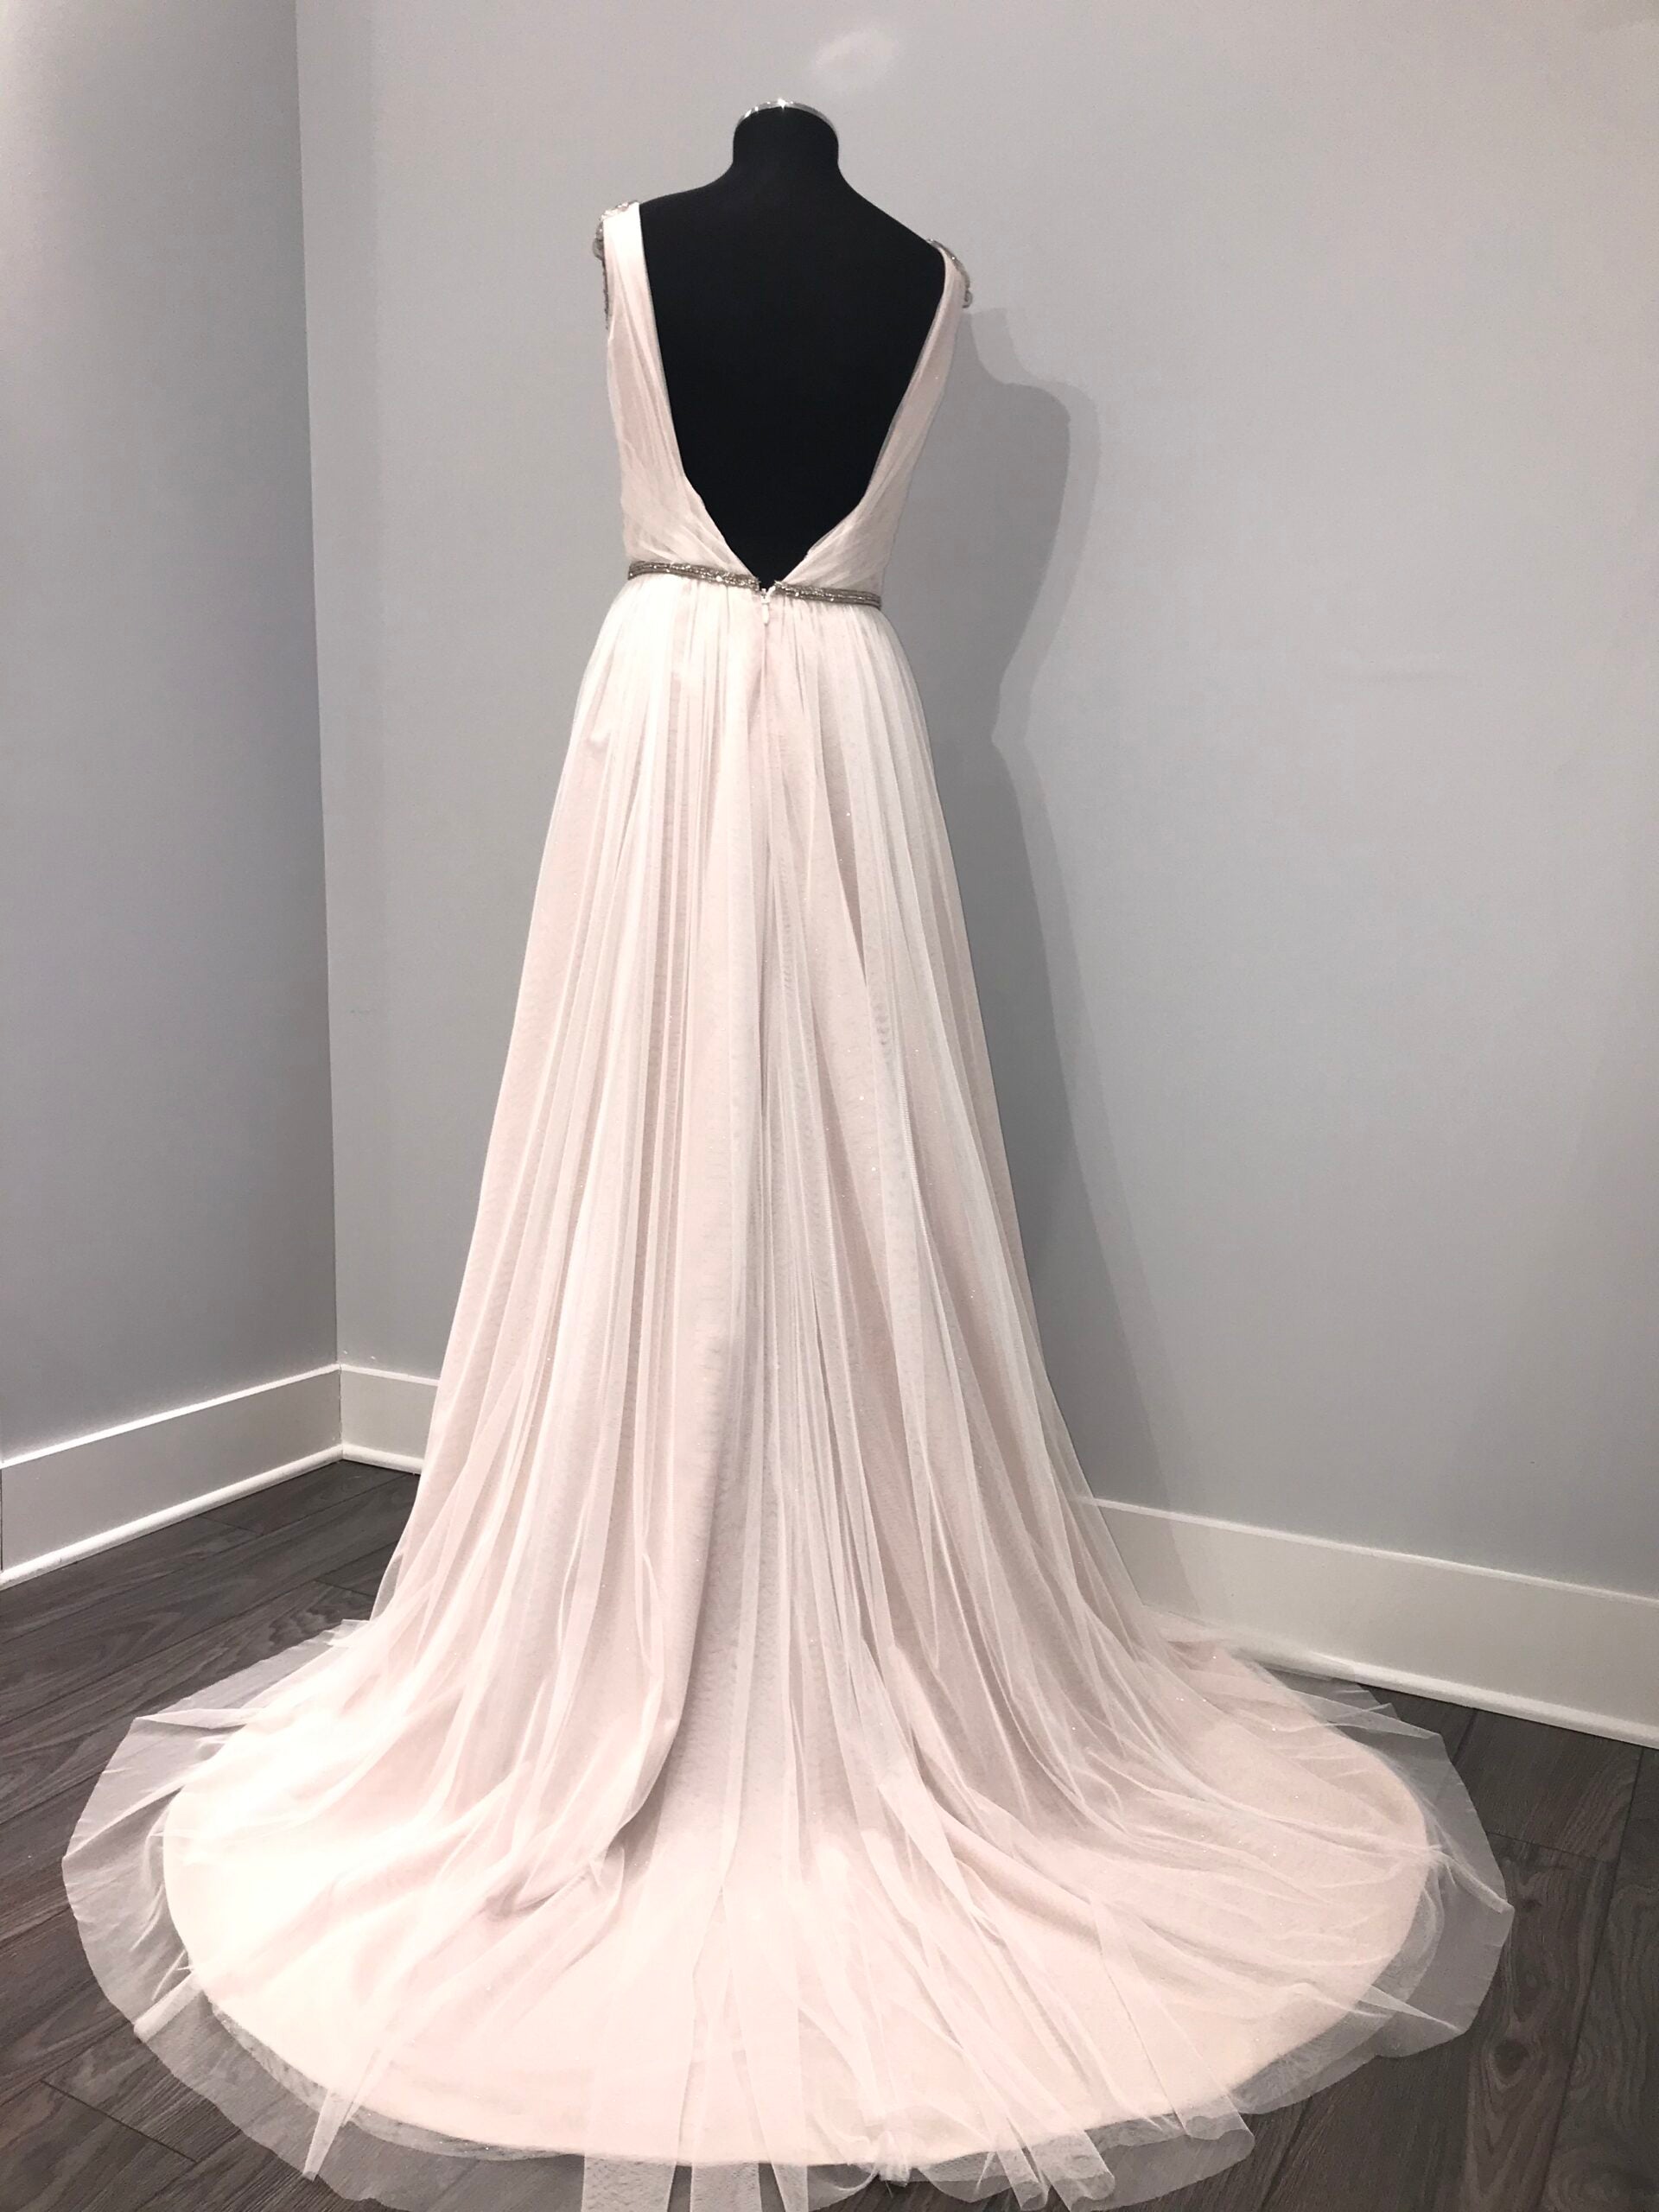 Hayley Paige BLUSH - Giada 1501 Sample Gown